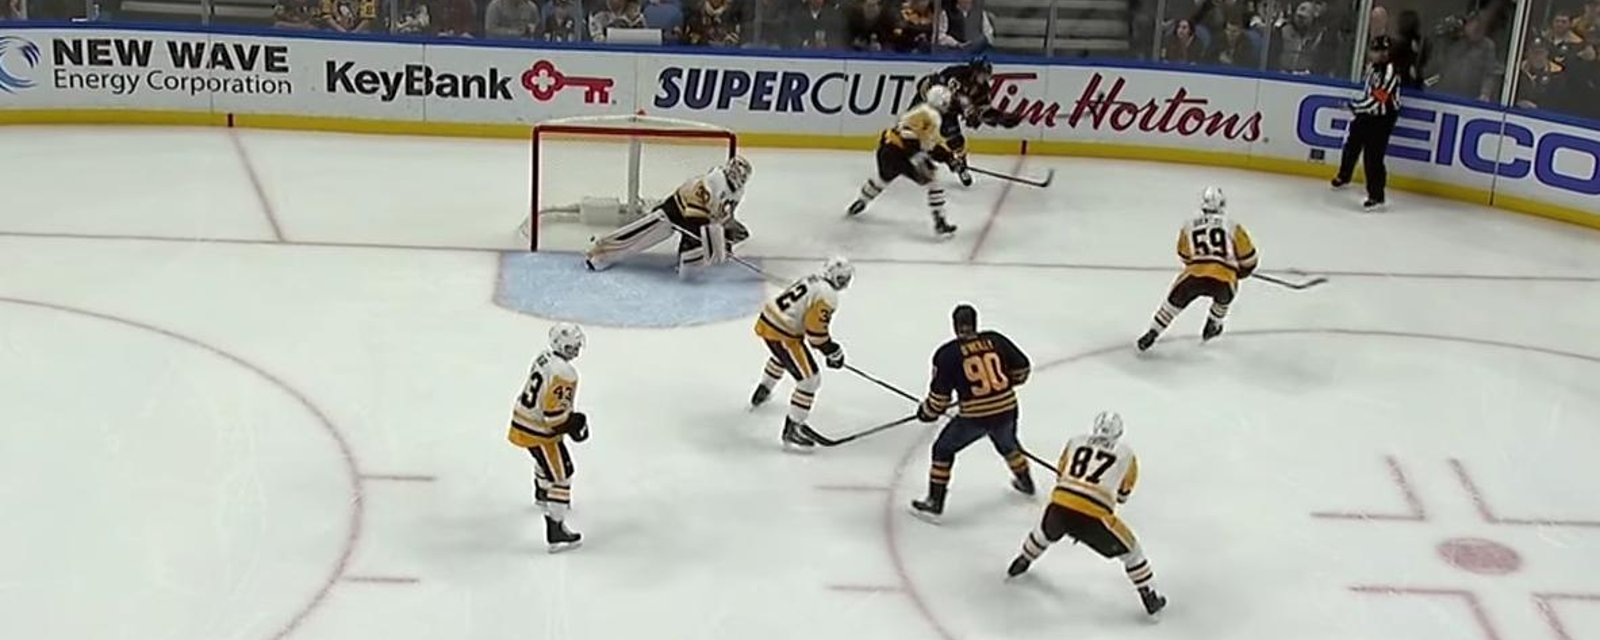 Crosby's victim comes to his defense! 